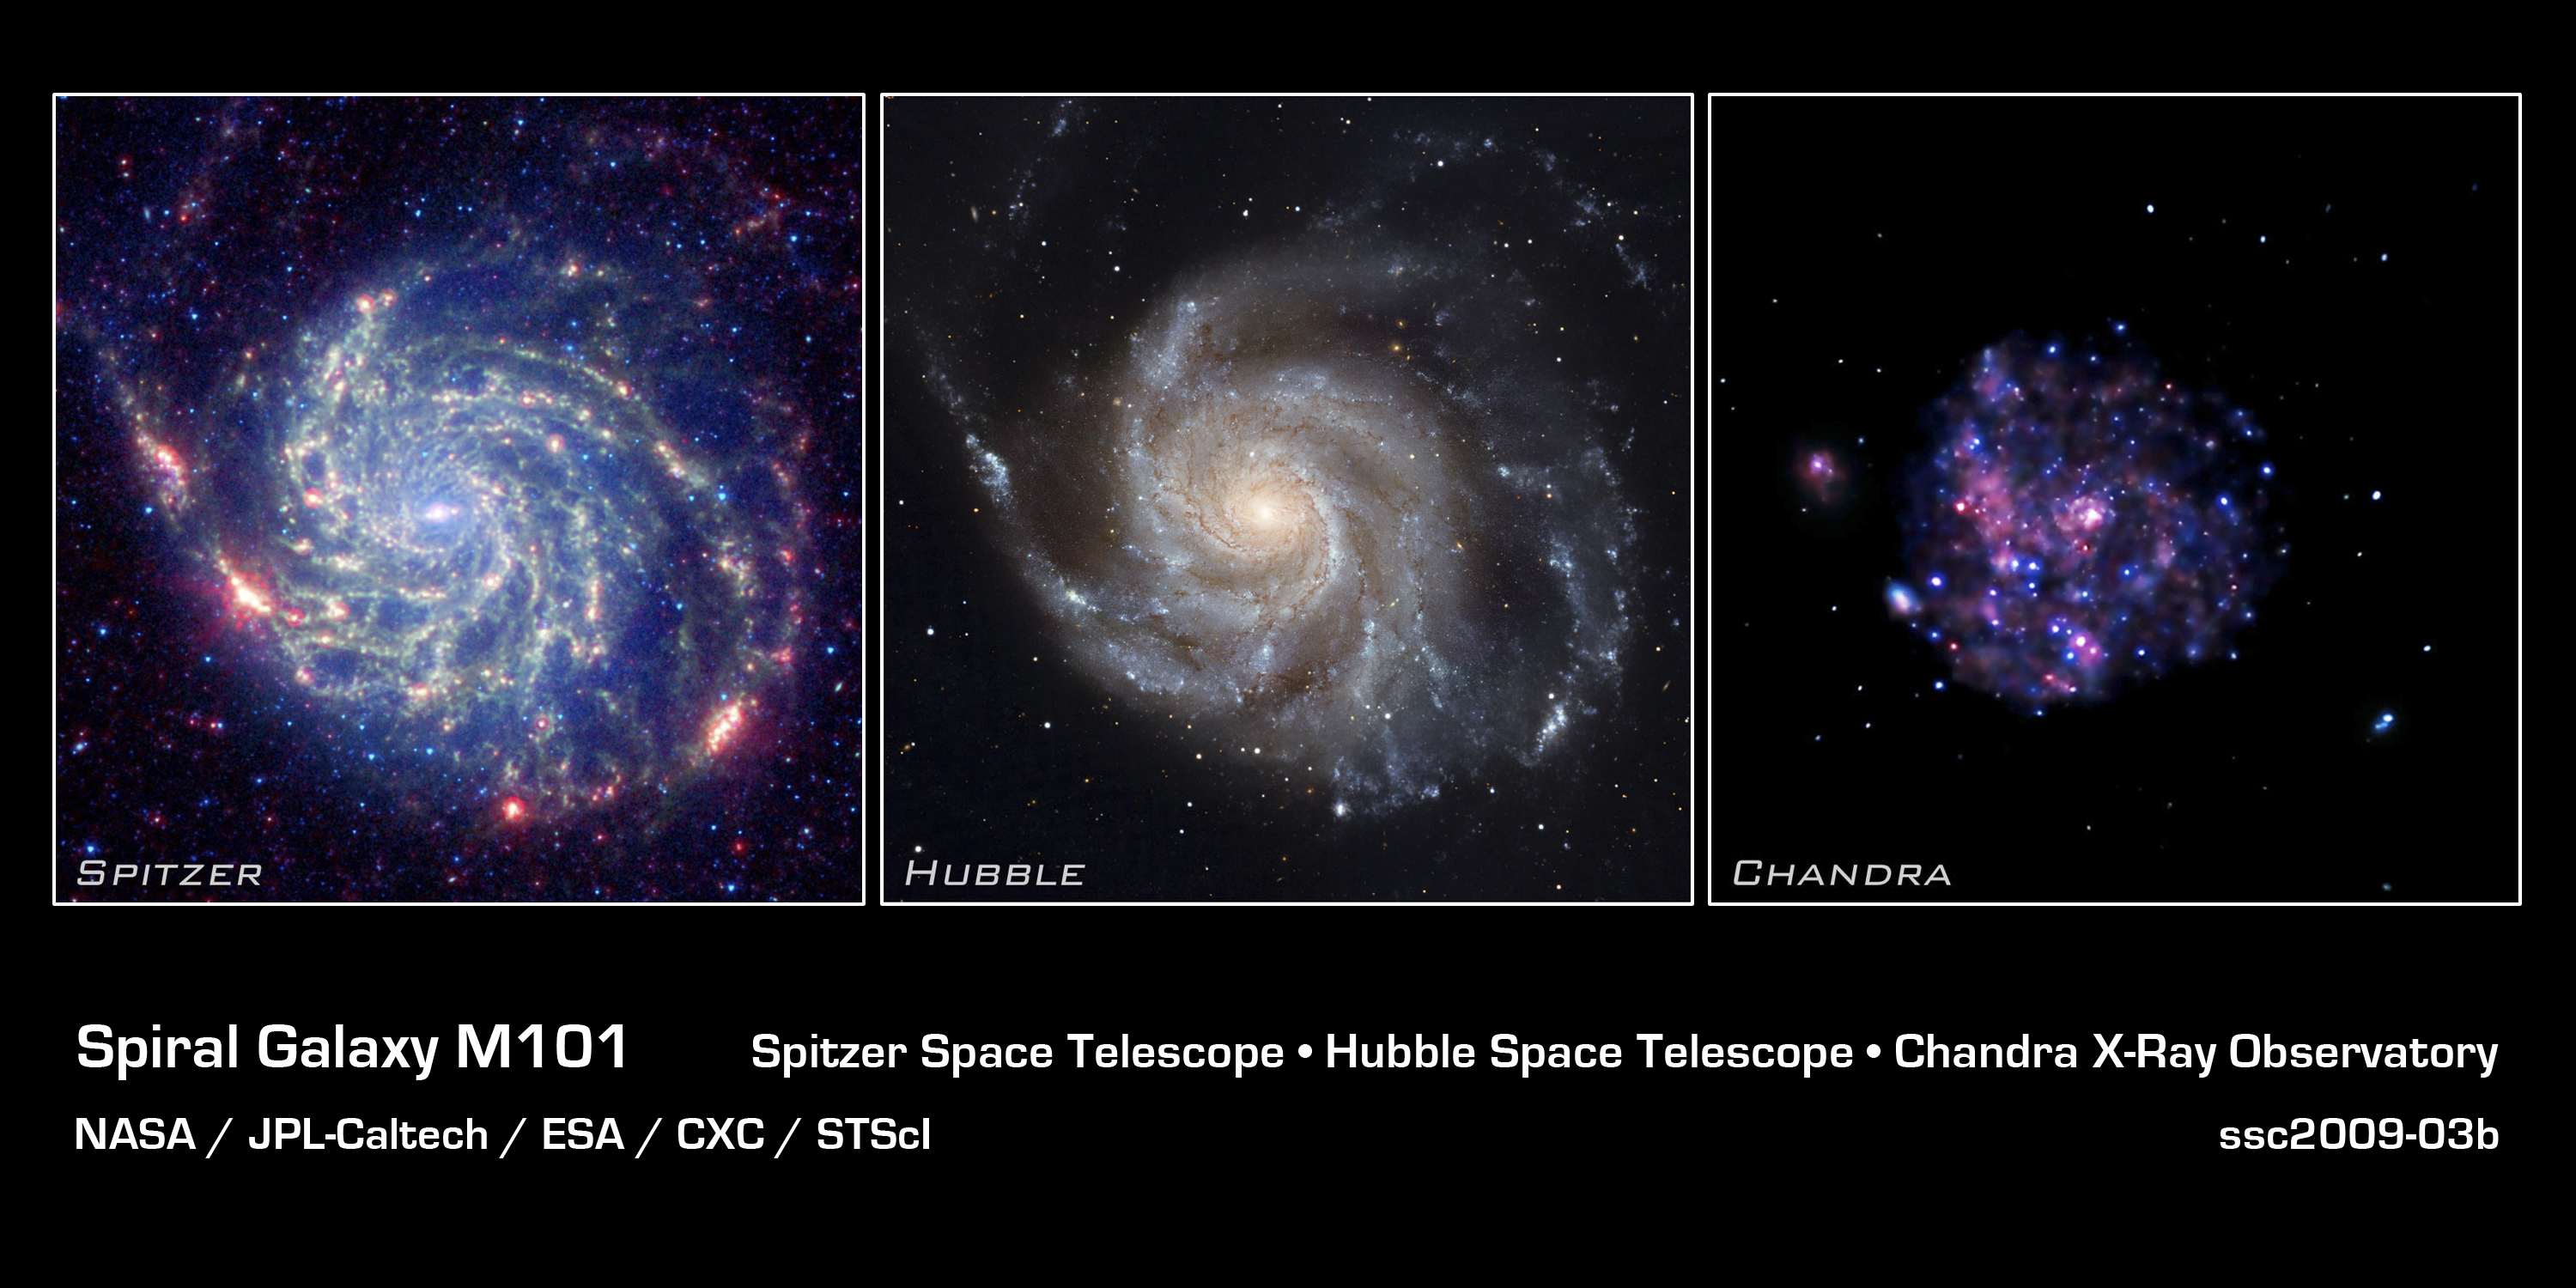 Spiral Galaxy M101 - NASA's Great Observatories